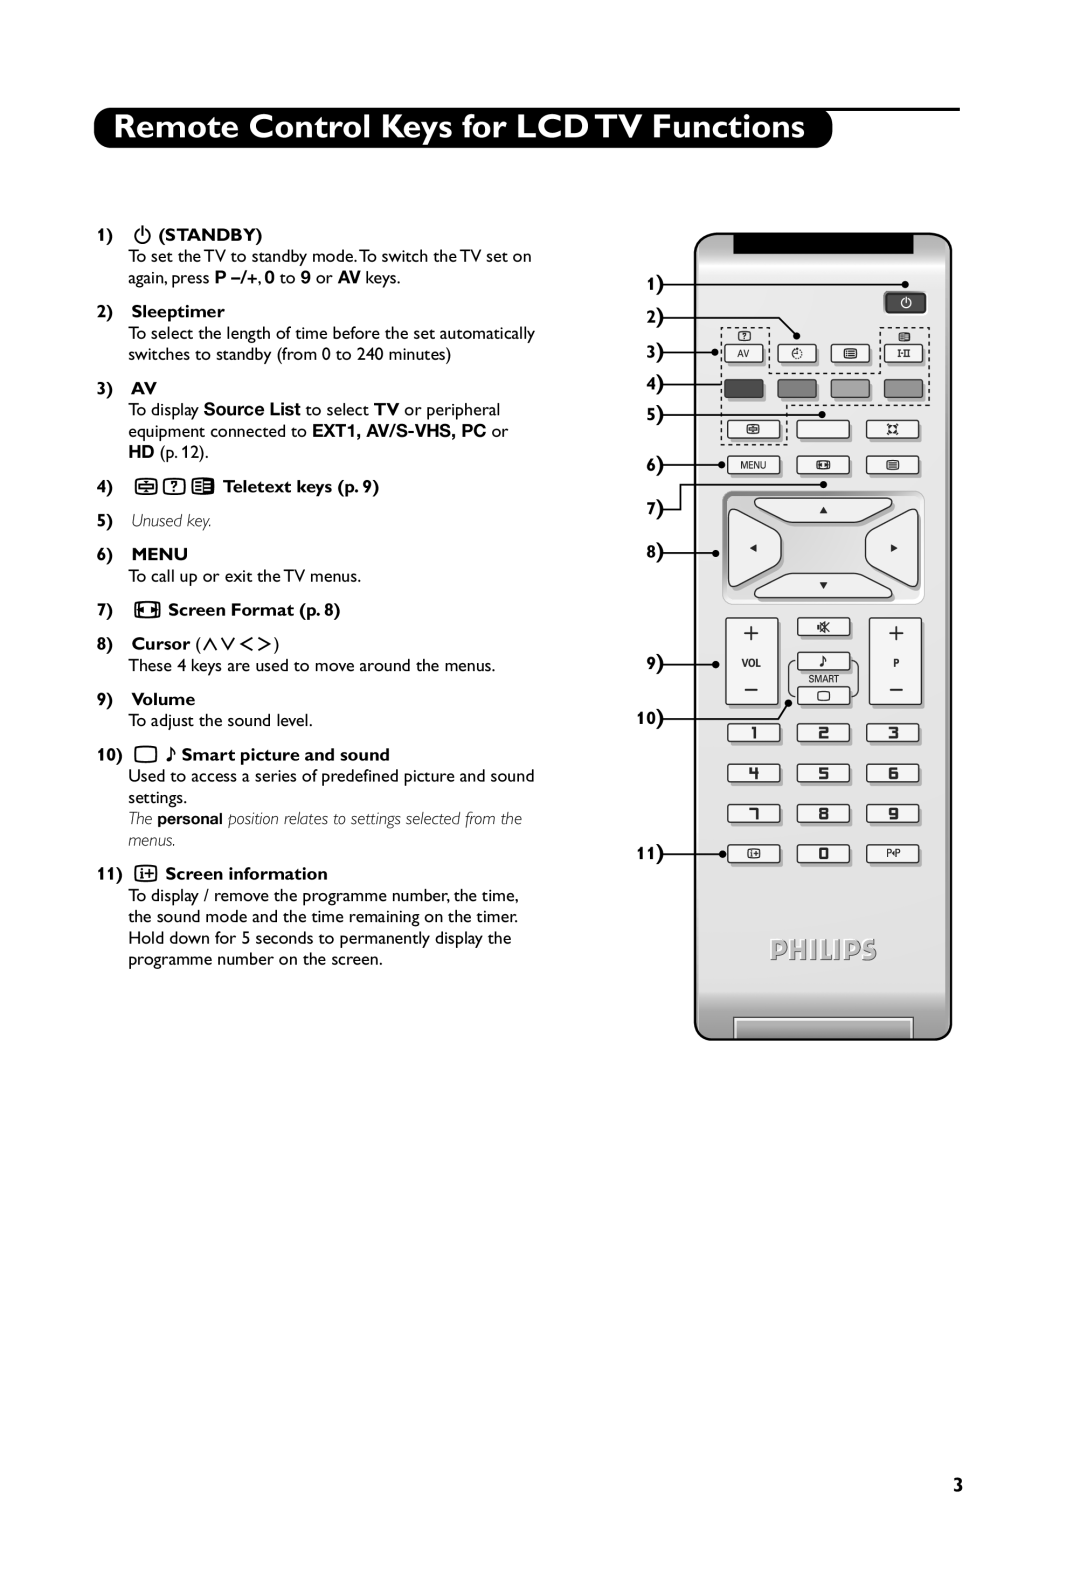 Philips 23PF4321 Remote Control Keys for LCD TV Functions, Standby, Sleeptimer, 3 AV, 4 ÓŸÅ Teletext keys p, Unused key 